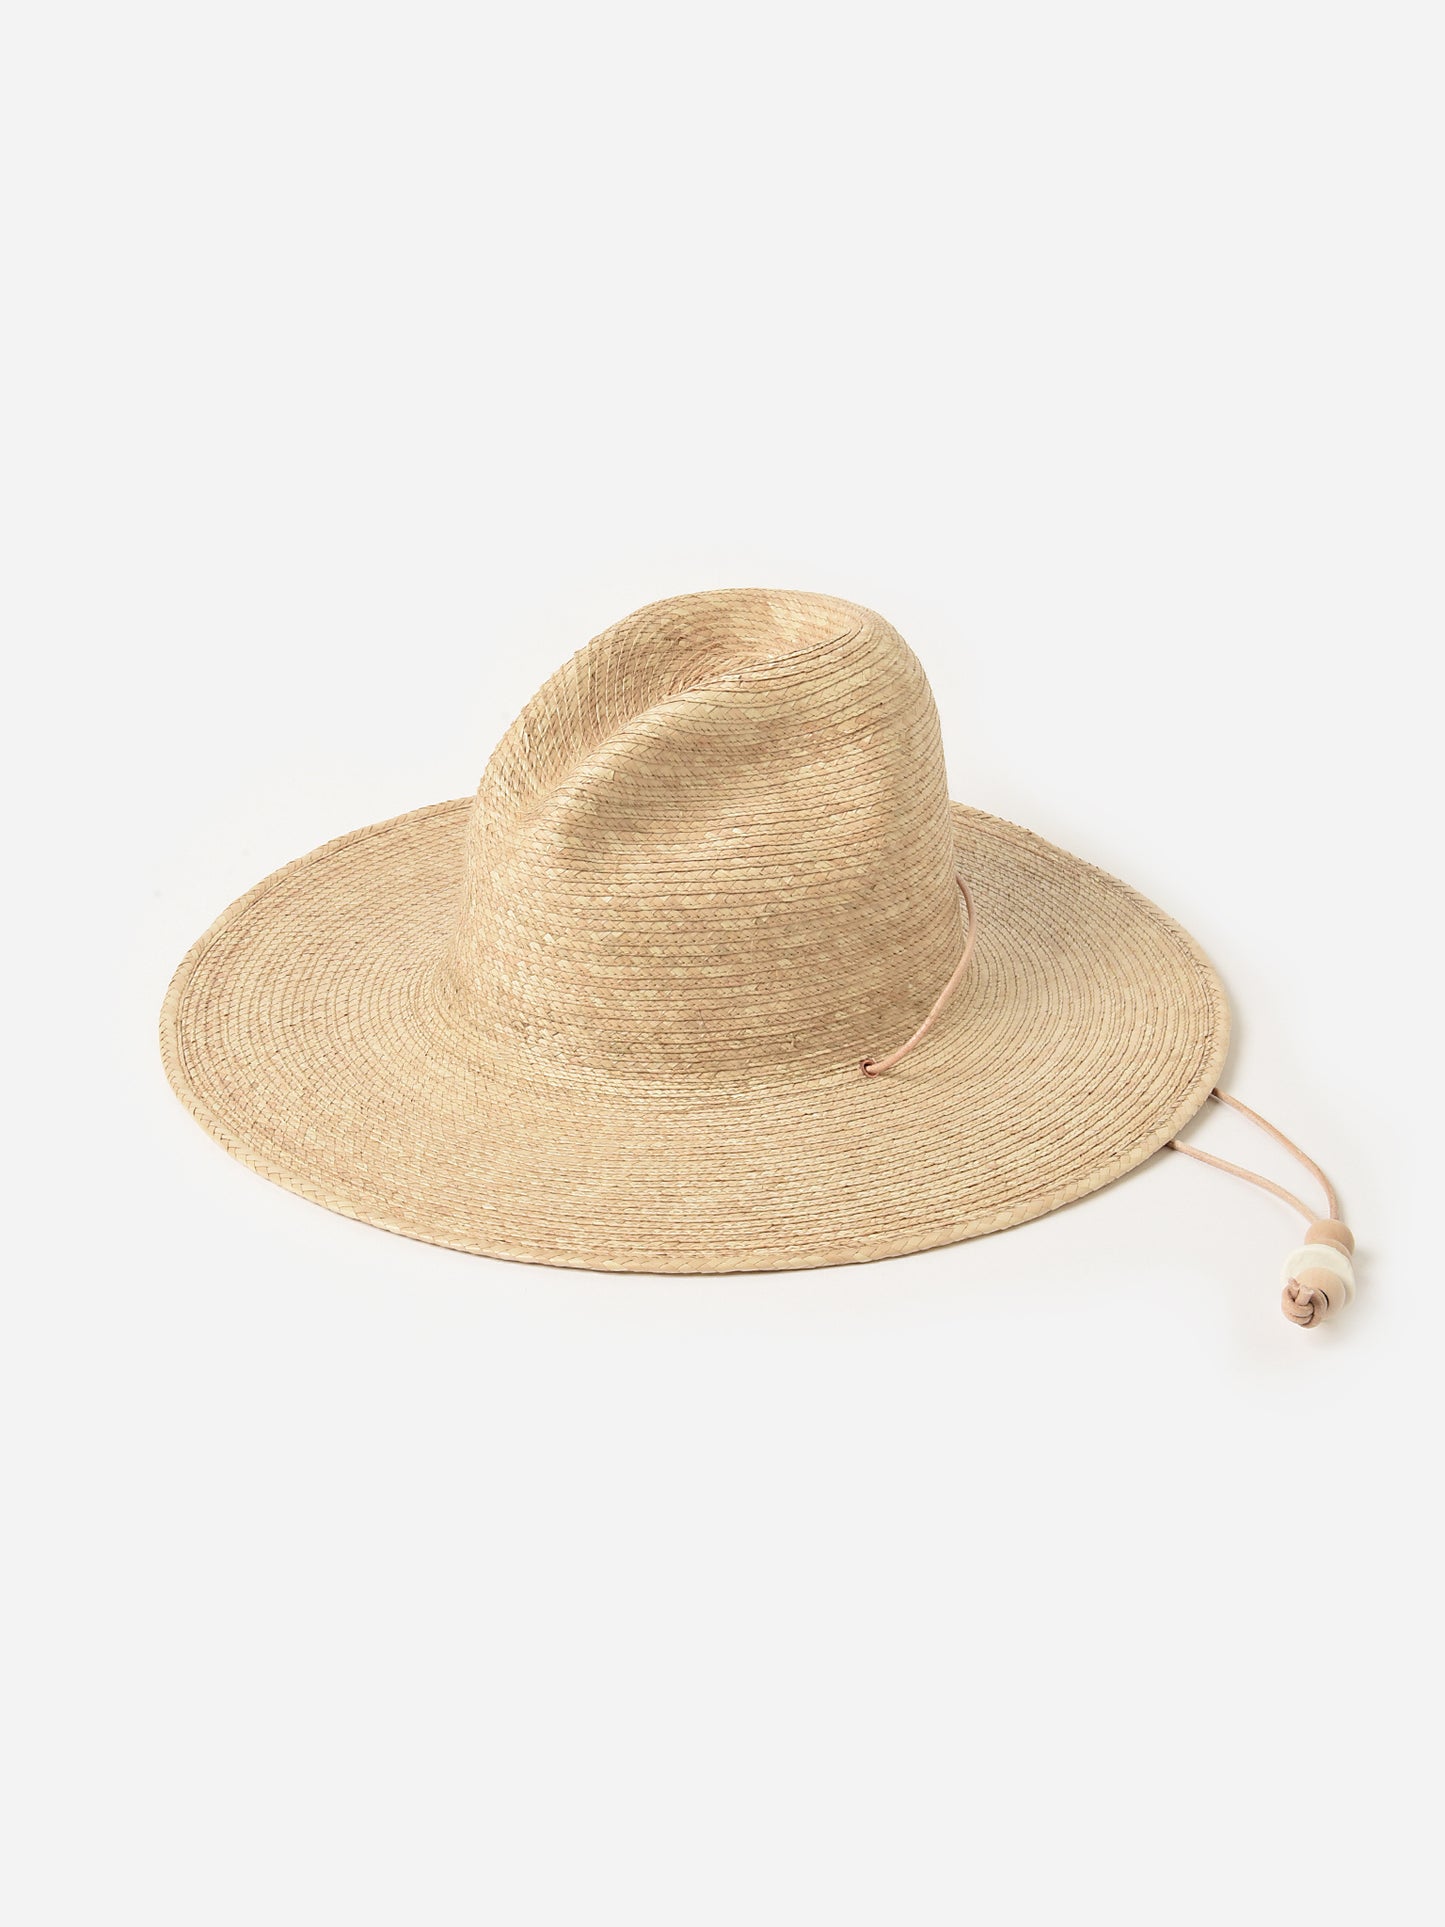 West Perro Women's Dome Hat